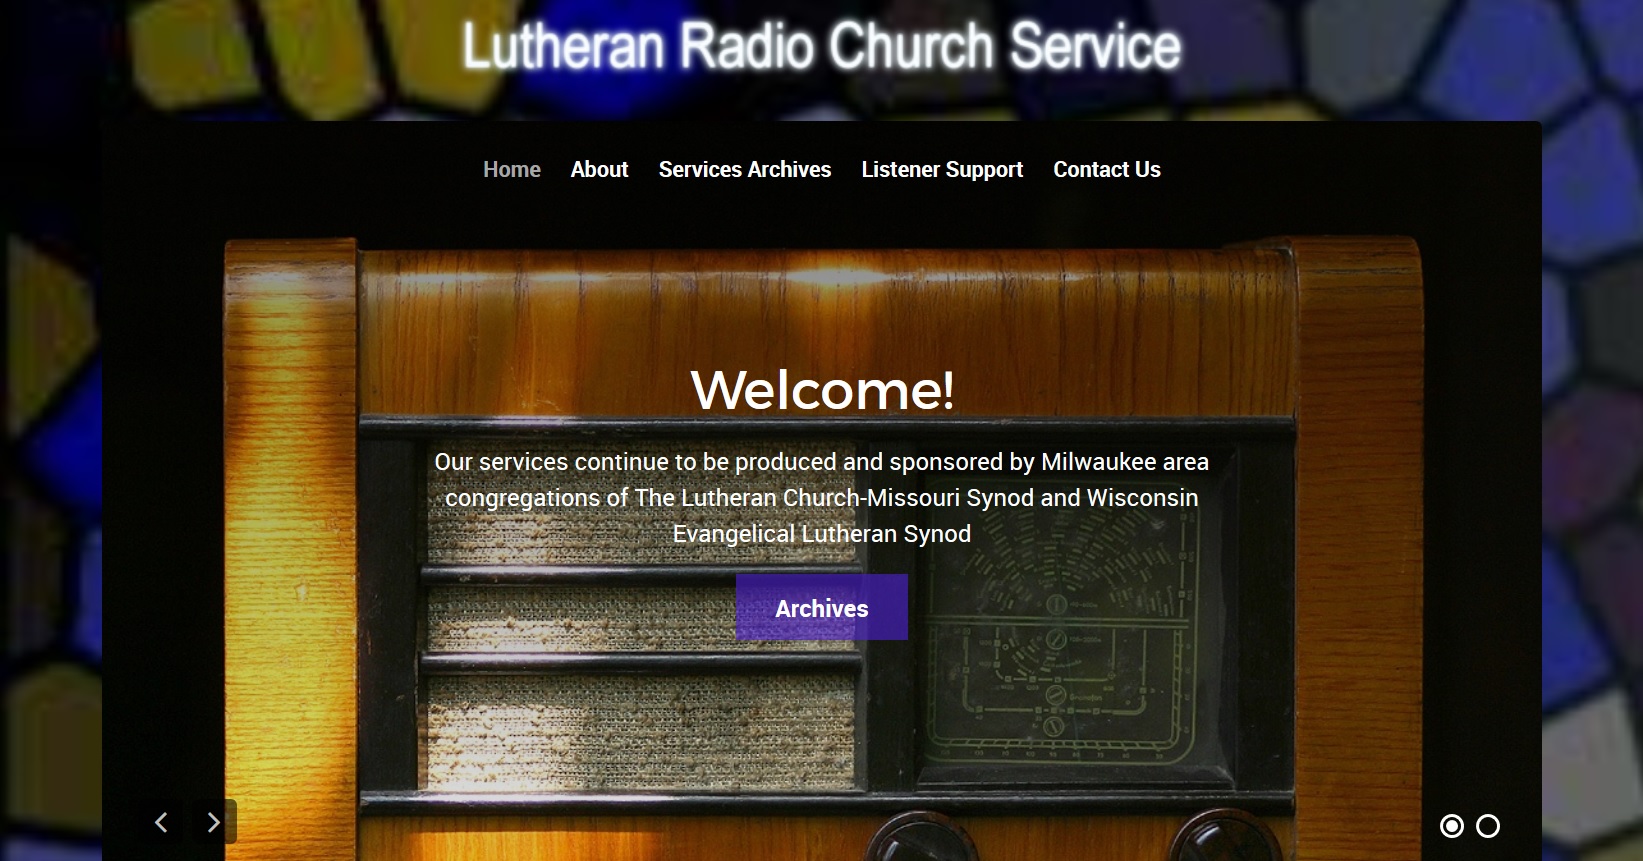 Lutheran Radio Church Service